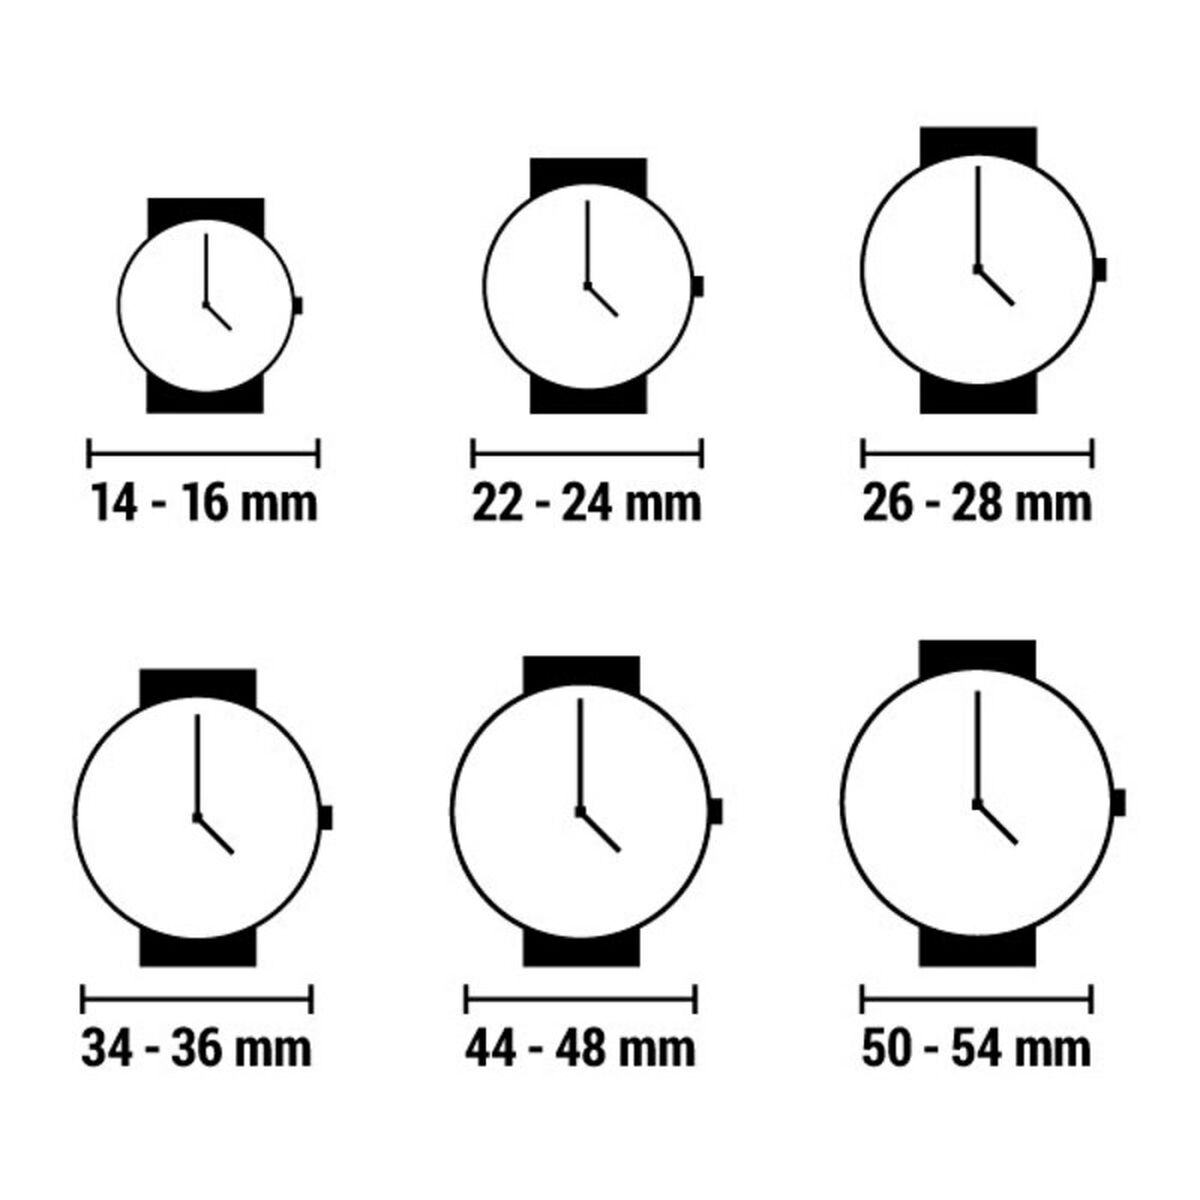 Horloge Dames Time Force TF4789-06M